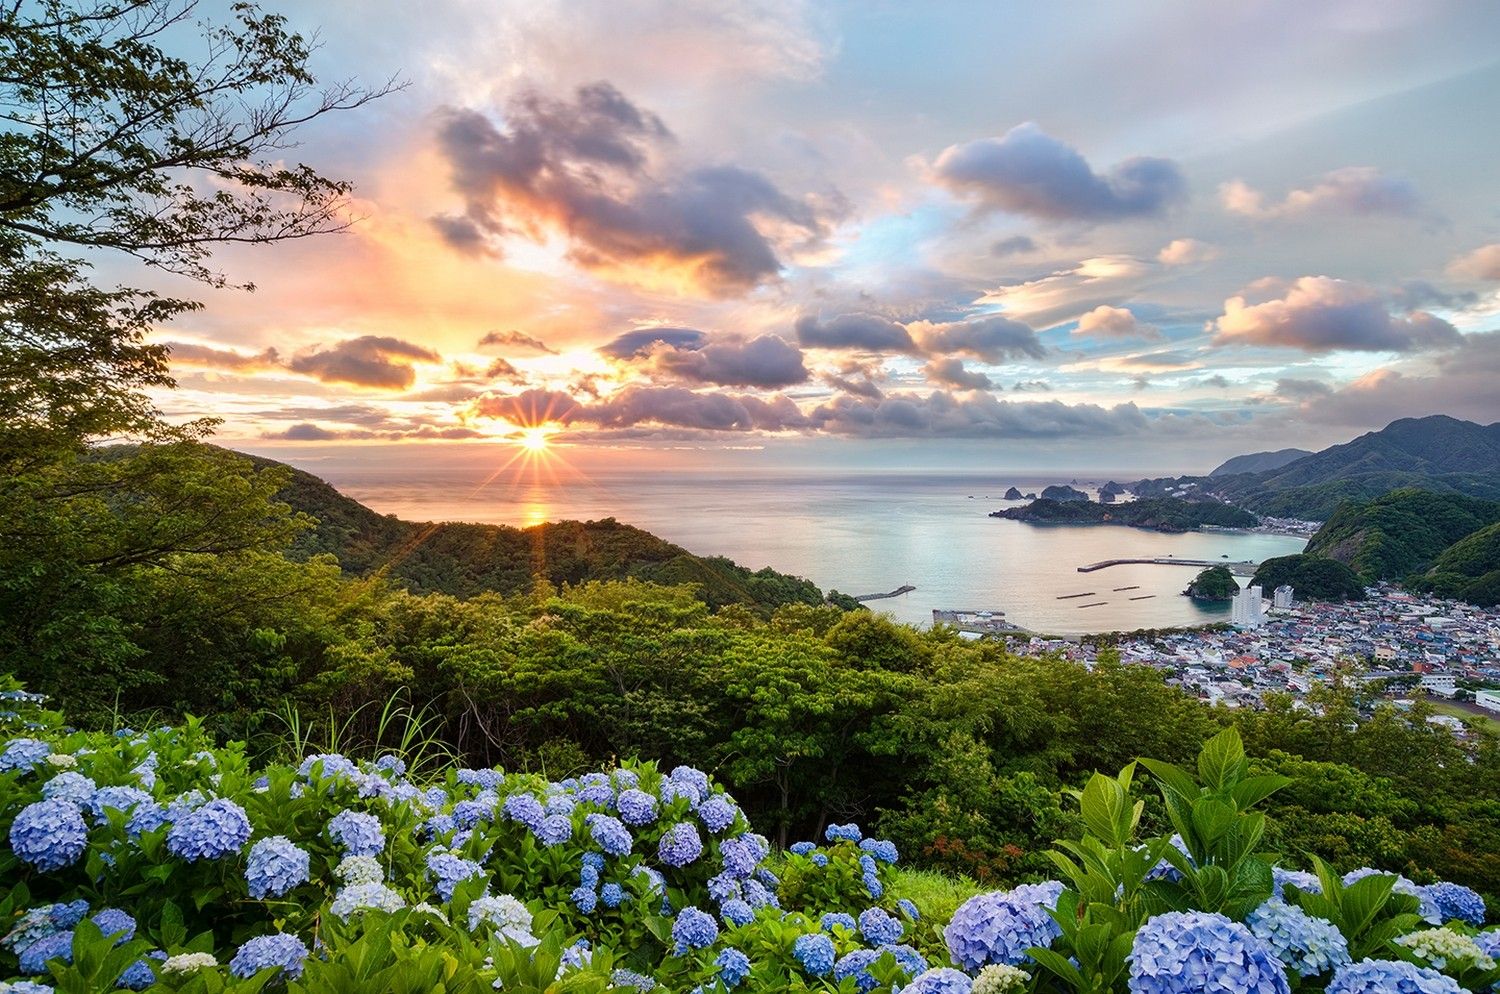 #sunset, #blue, #sea, #bay, #hills, #cityscape, #green, #flowers, #clouds, #hydrangea, #purple, #orange, #blue flowers, #nature, #Japan, # summer, #landscape, #trees, #ports, wallpaper HD Wallpaper